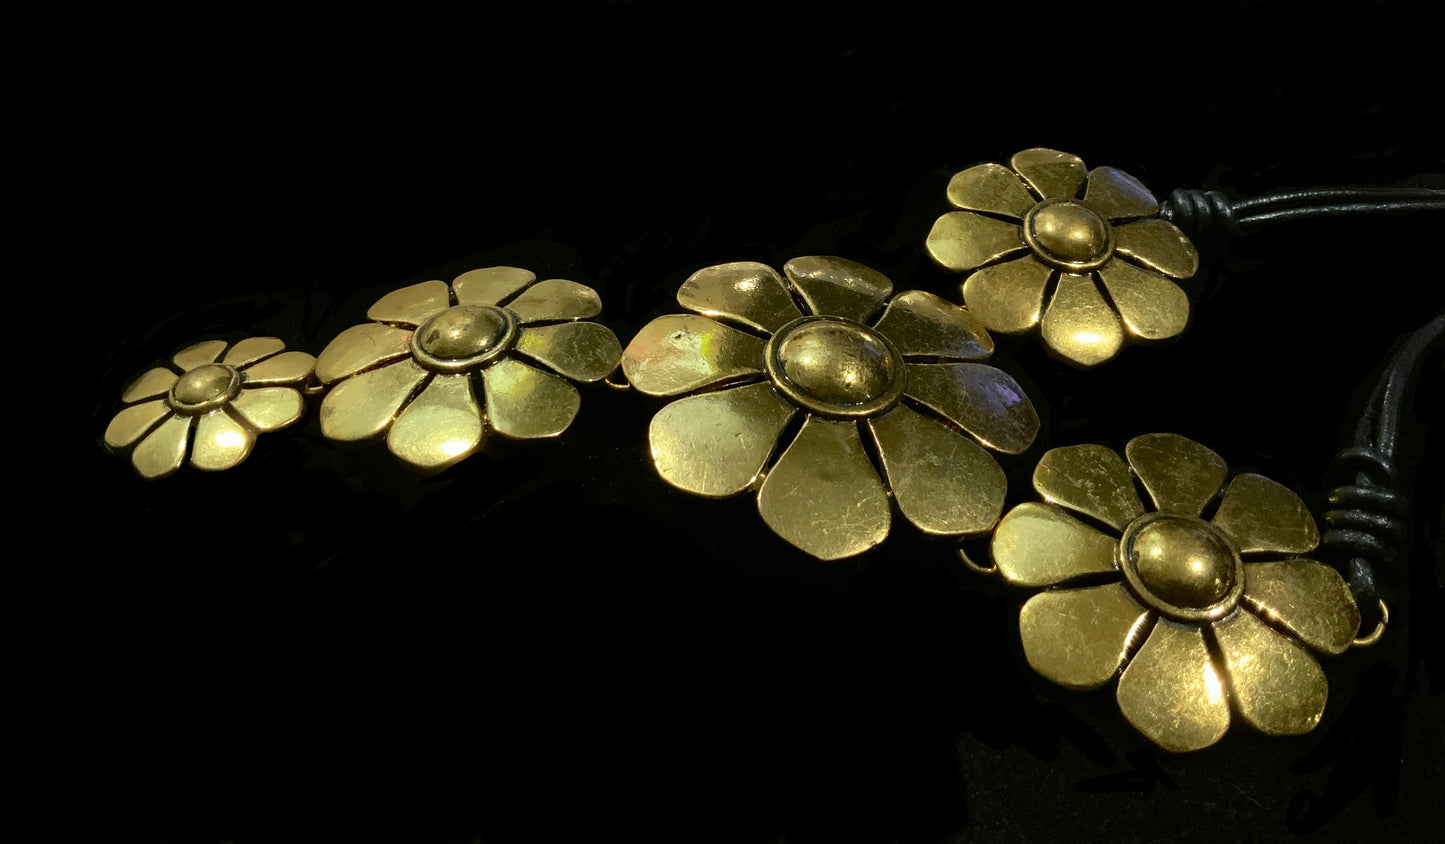 Fabulous Mod Gold Tone Flower Power Statement Necklace